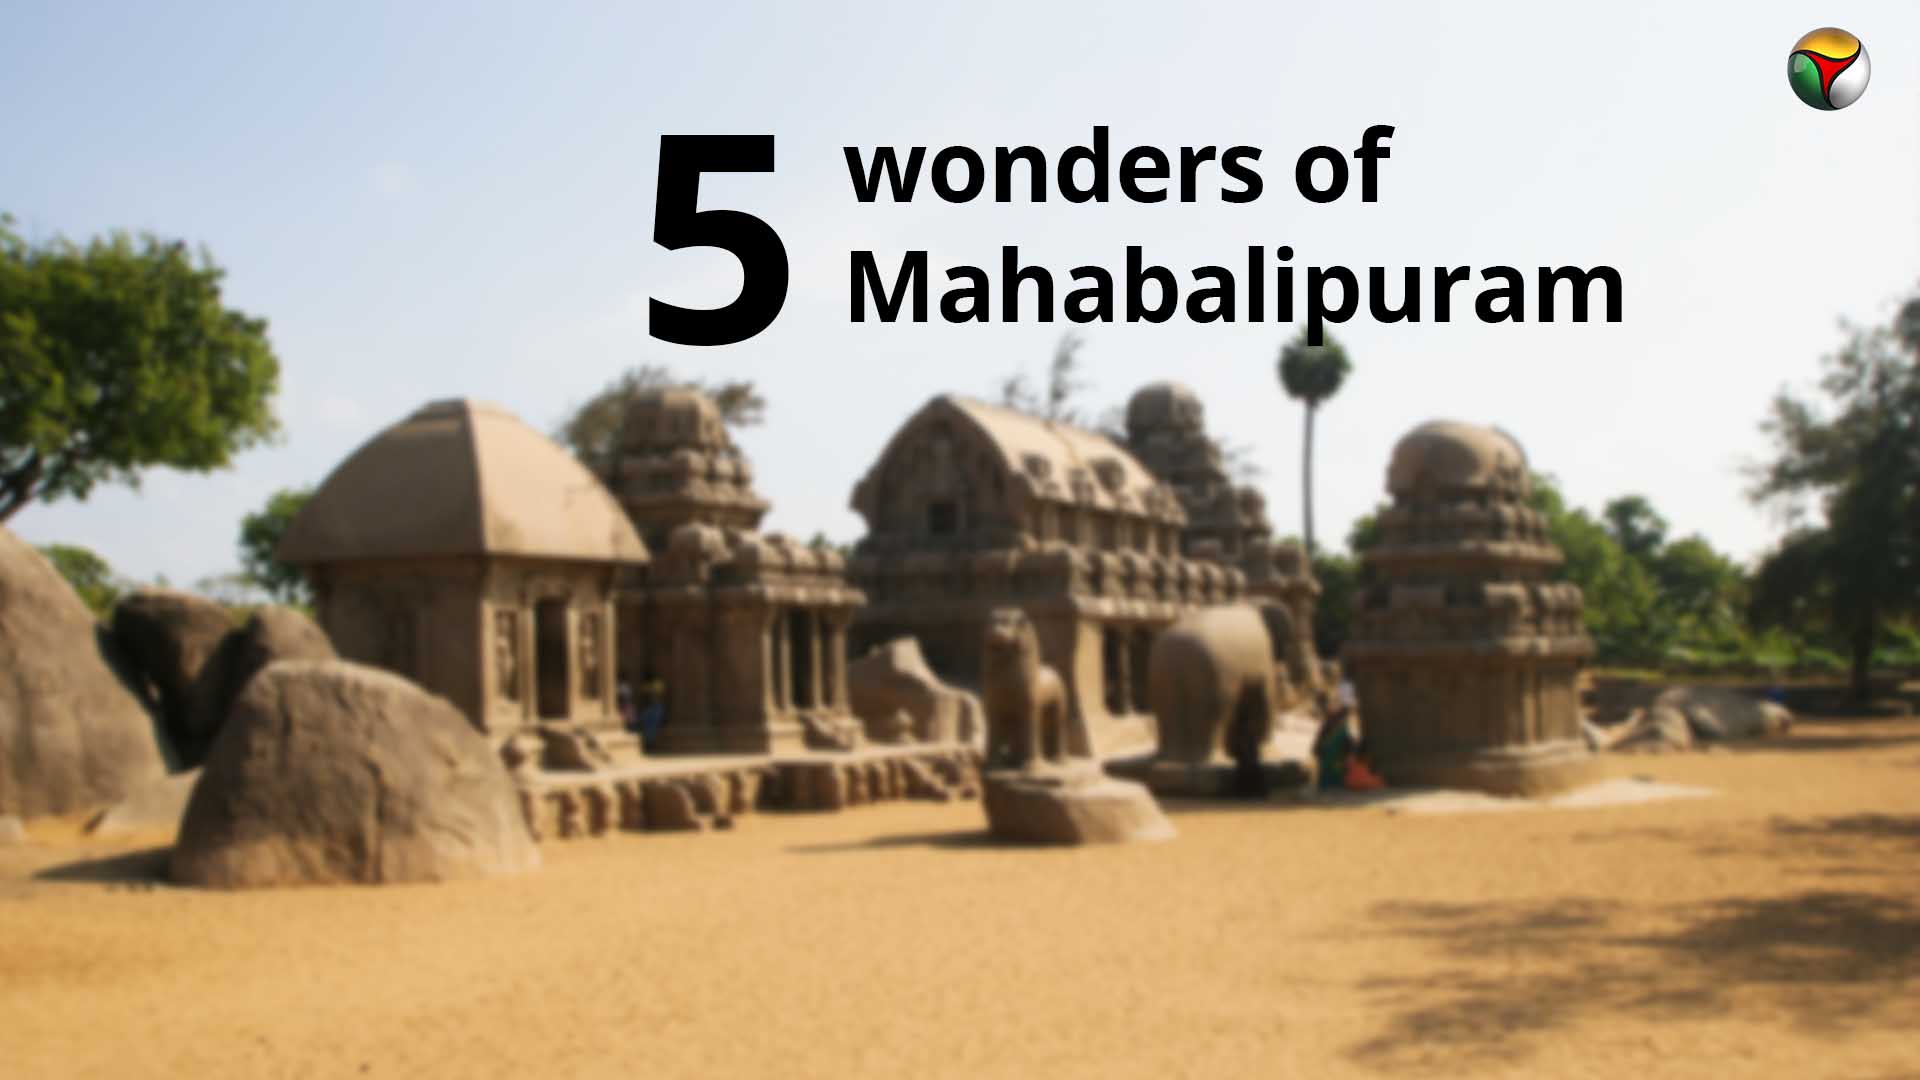 The five wonders of Mahabalipuram